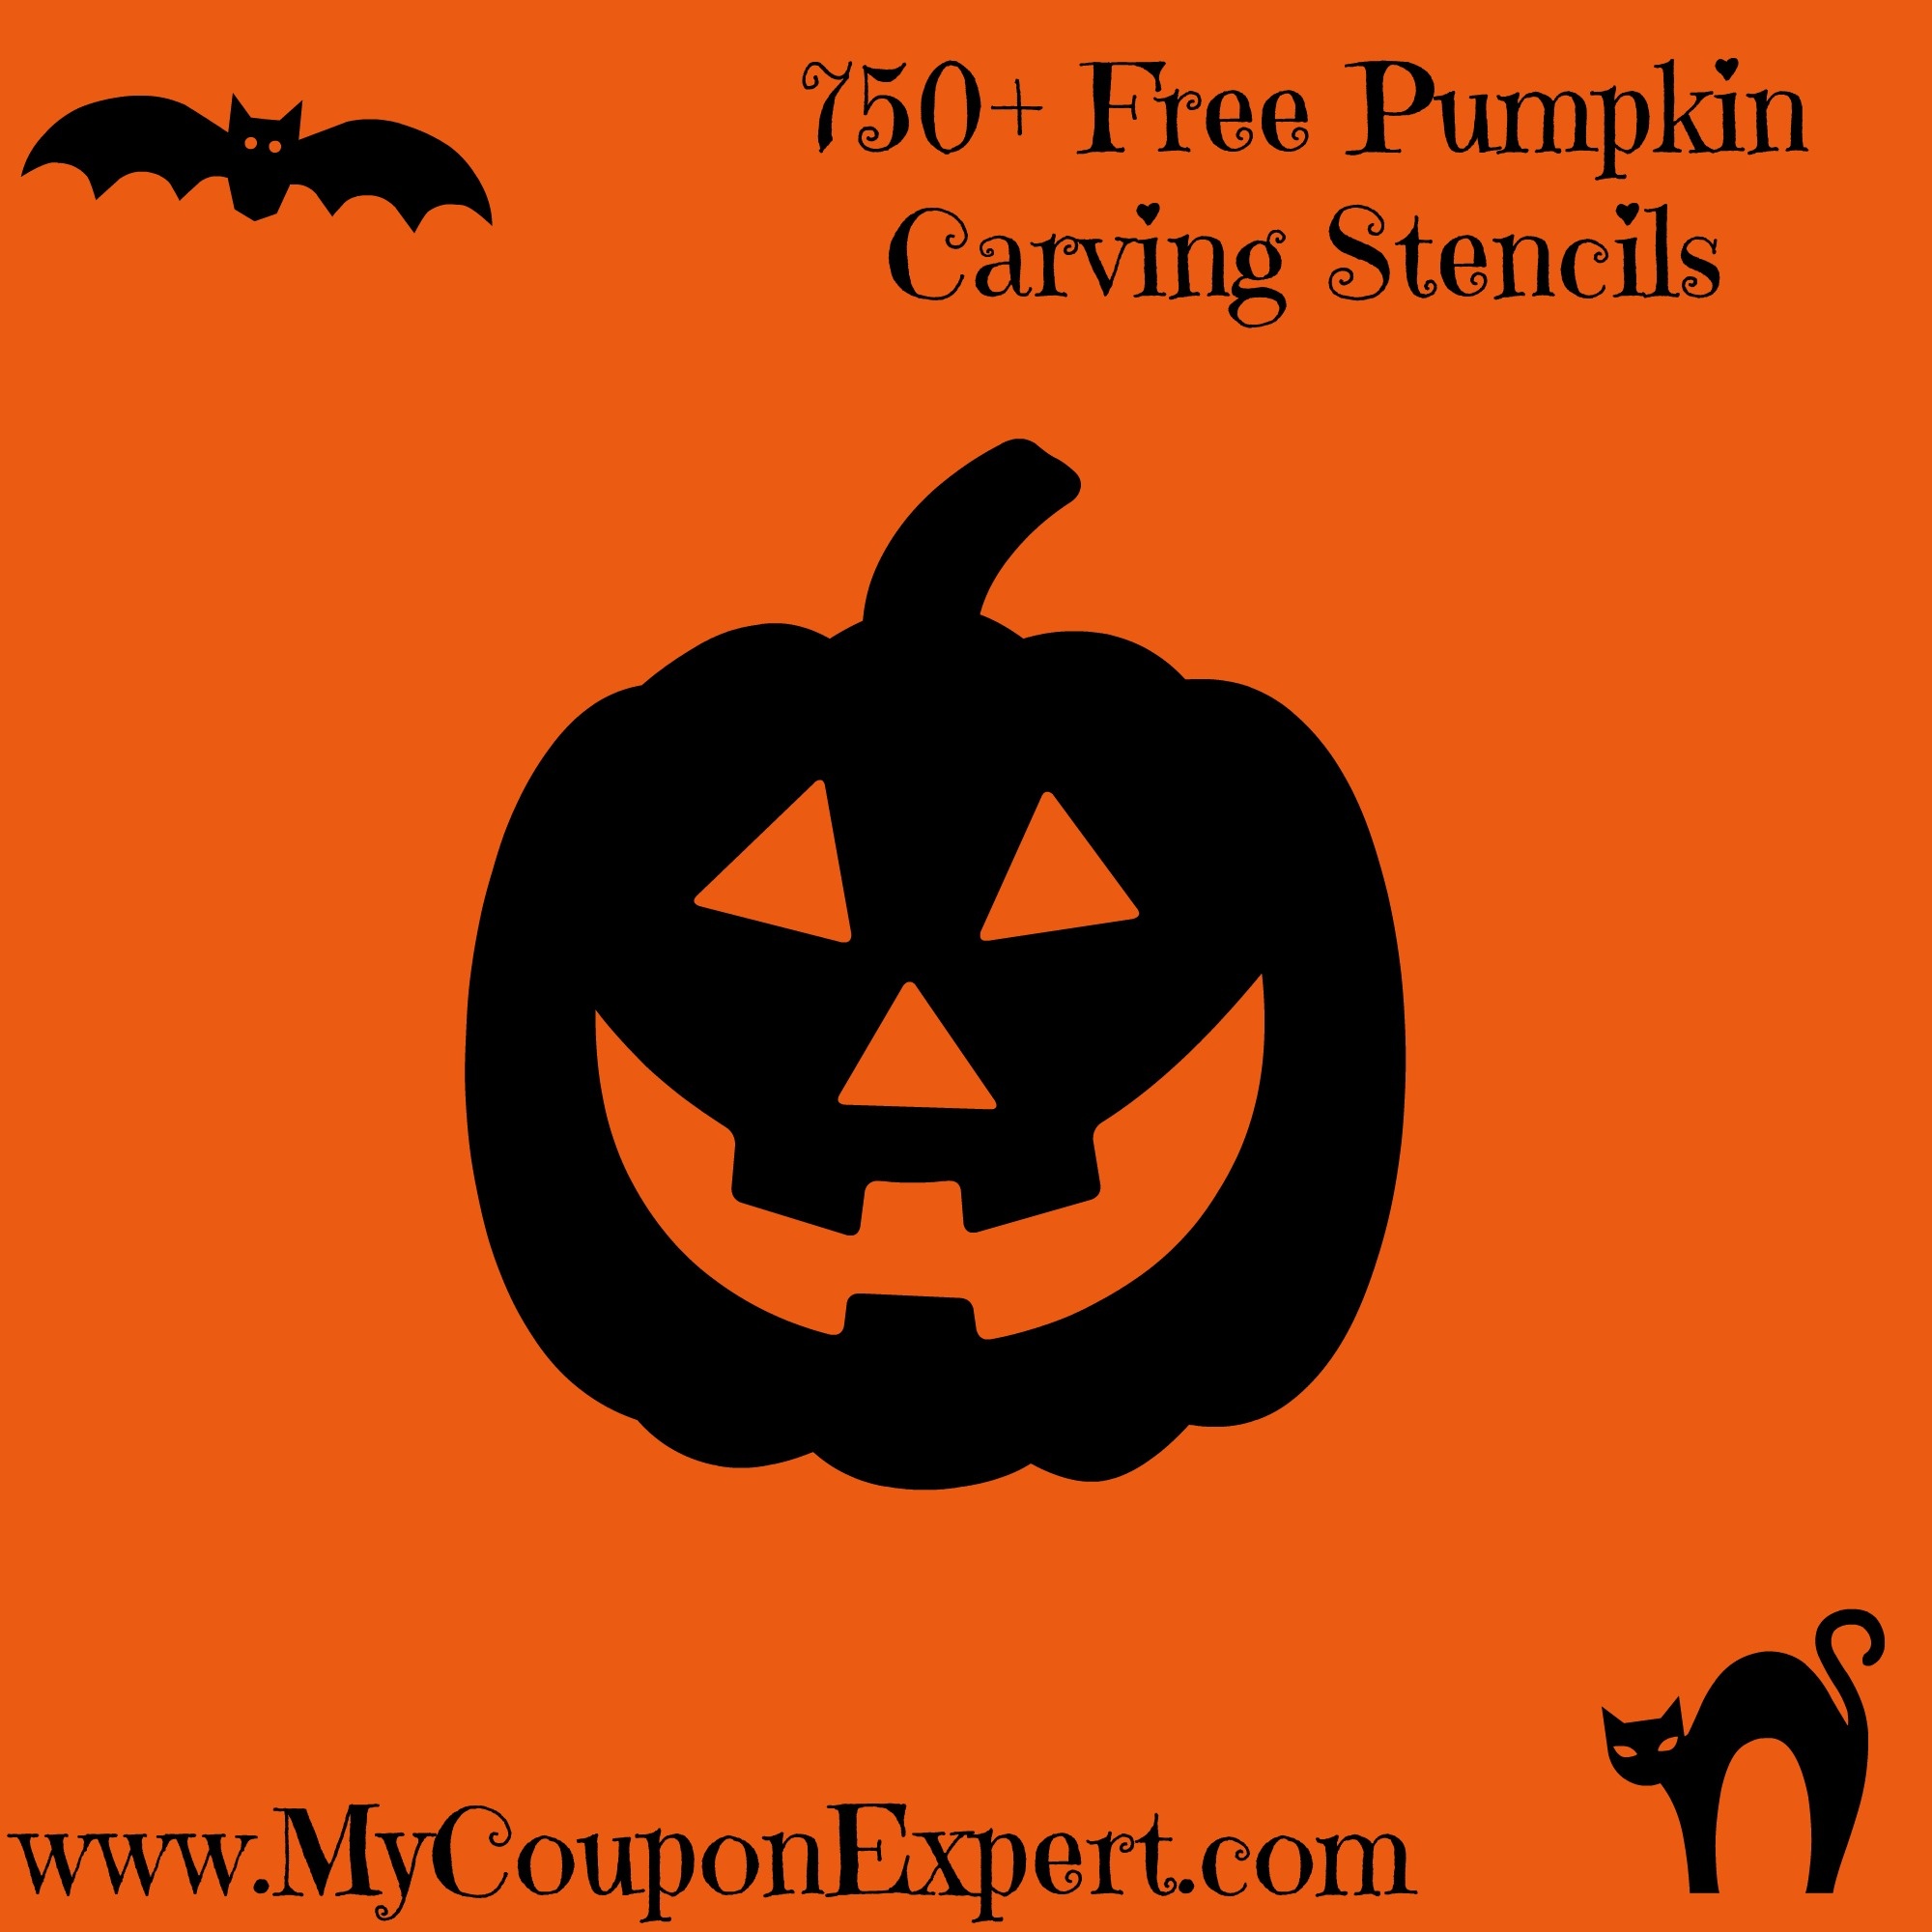 750+ Free Pumpkin Carving Stencils - - Pumpkin Patterns Free Printable - .....